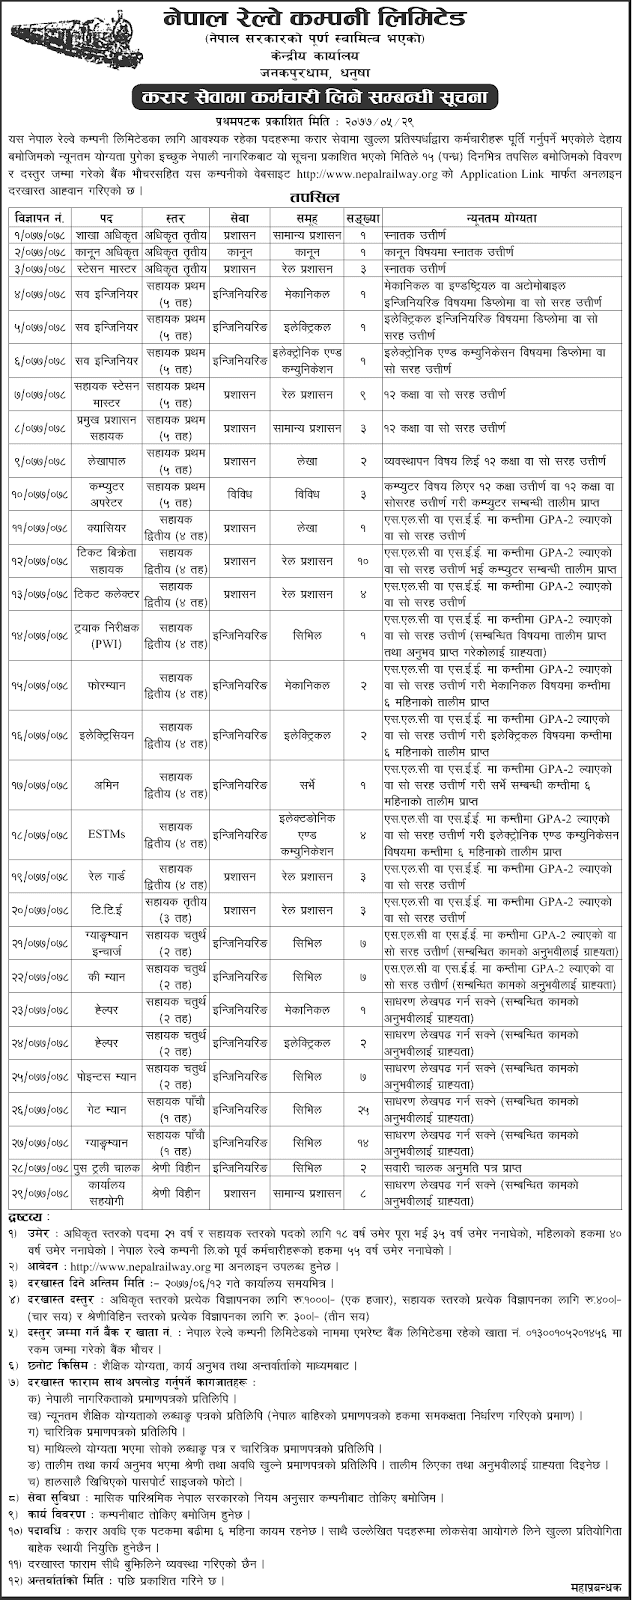 Nepal Railway Company Limited Job Vacancy f